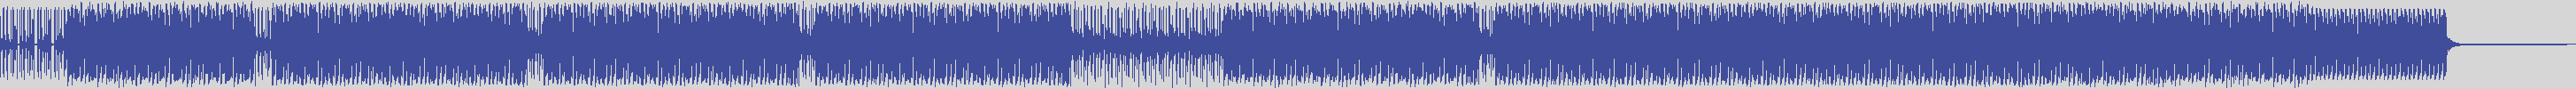 nf_boyz_records [NFY057] Dj Macfly - Melmor [Tribal Edit] audio wave form